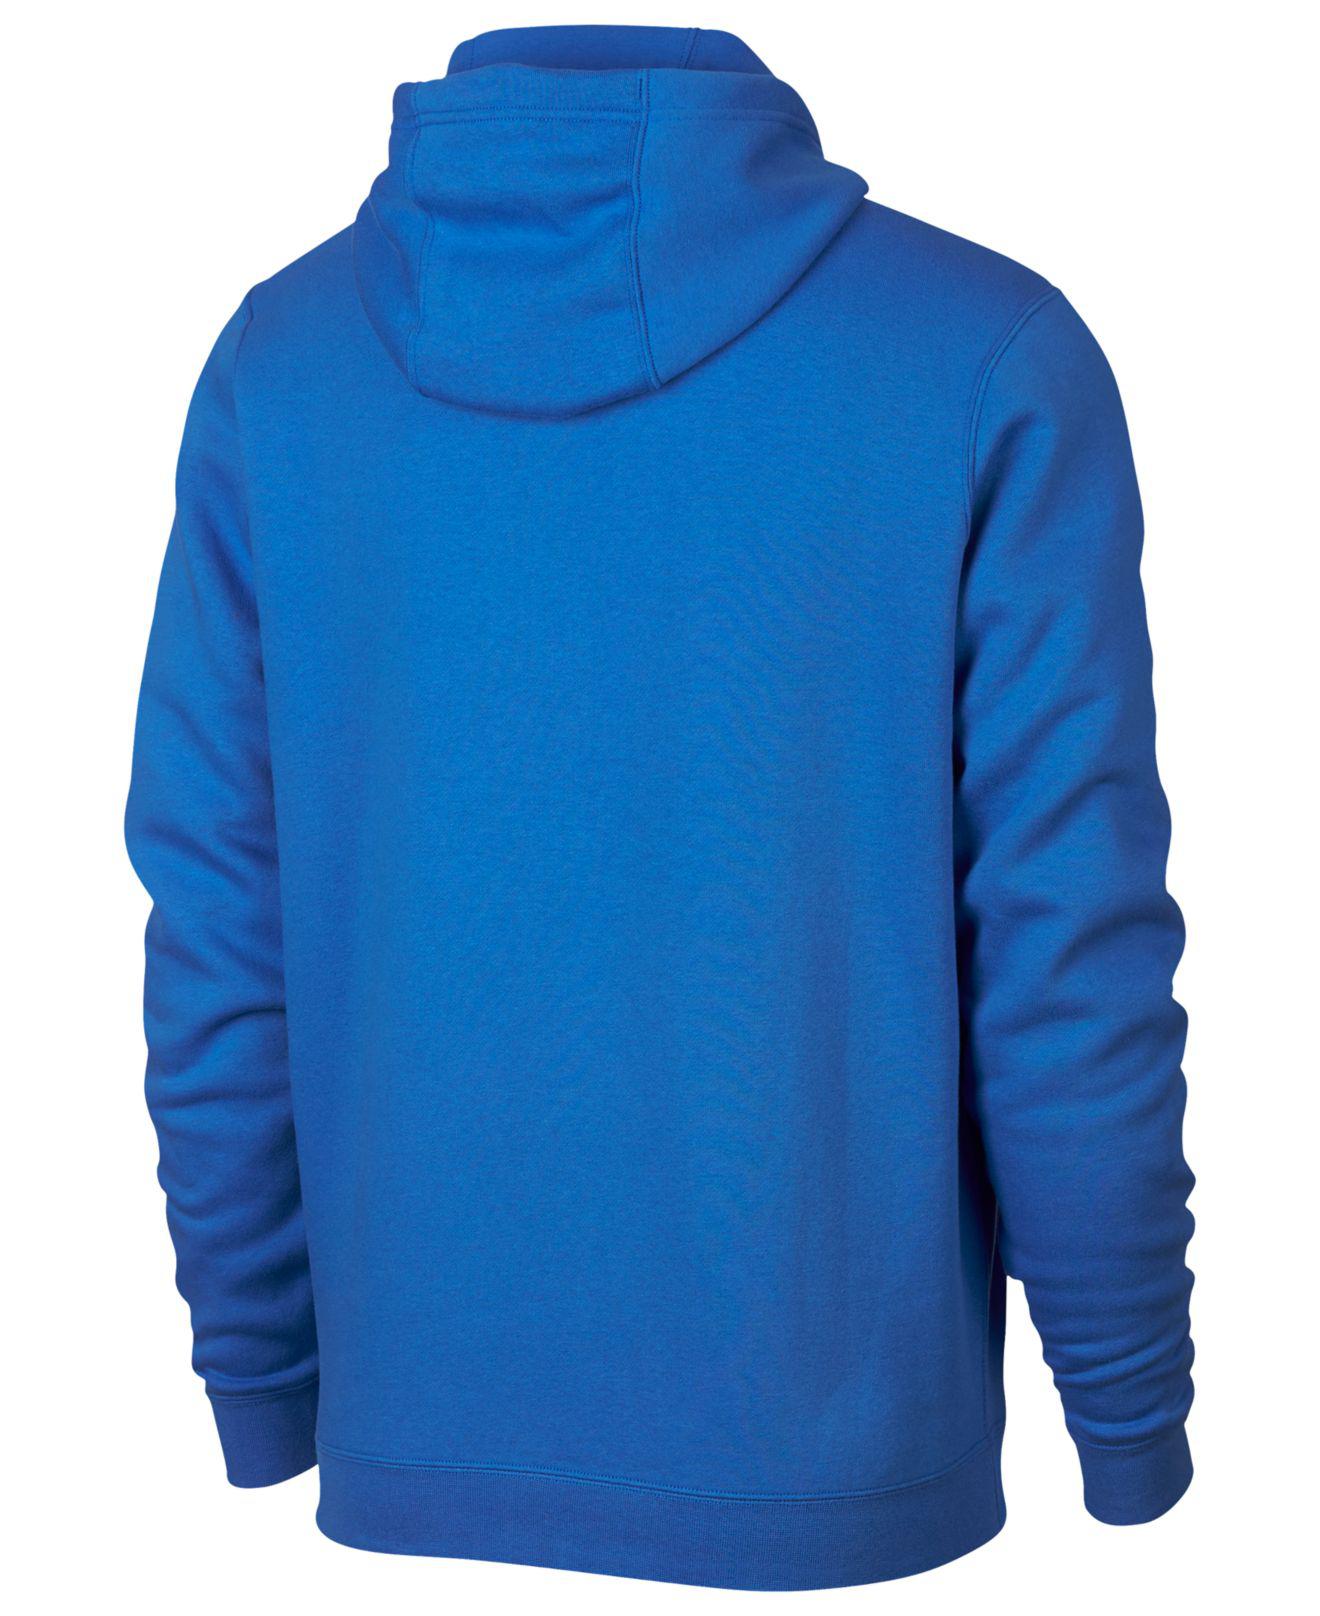 blue just do it hoodie